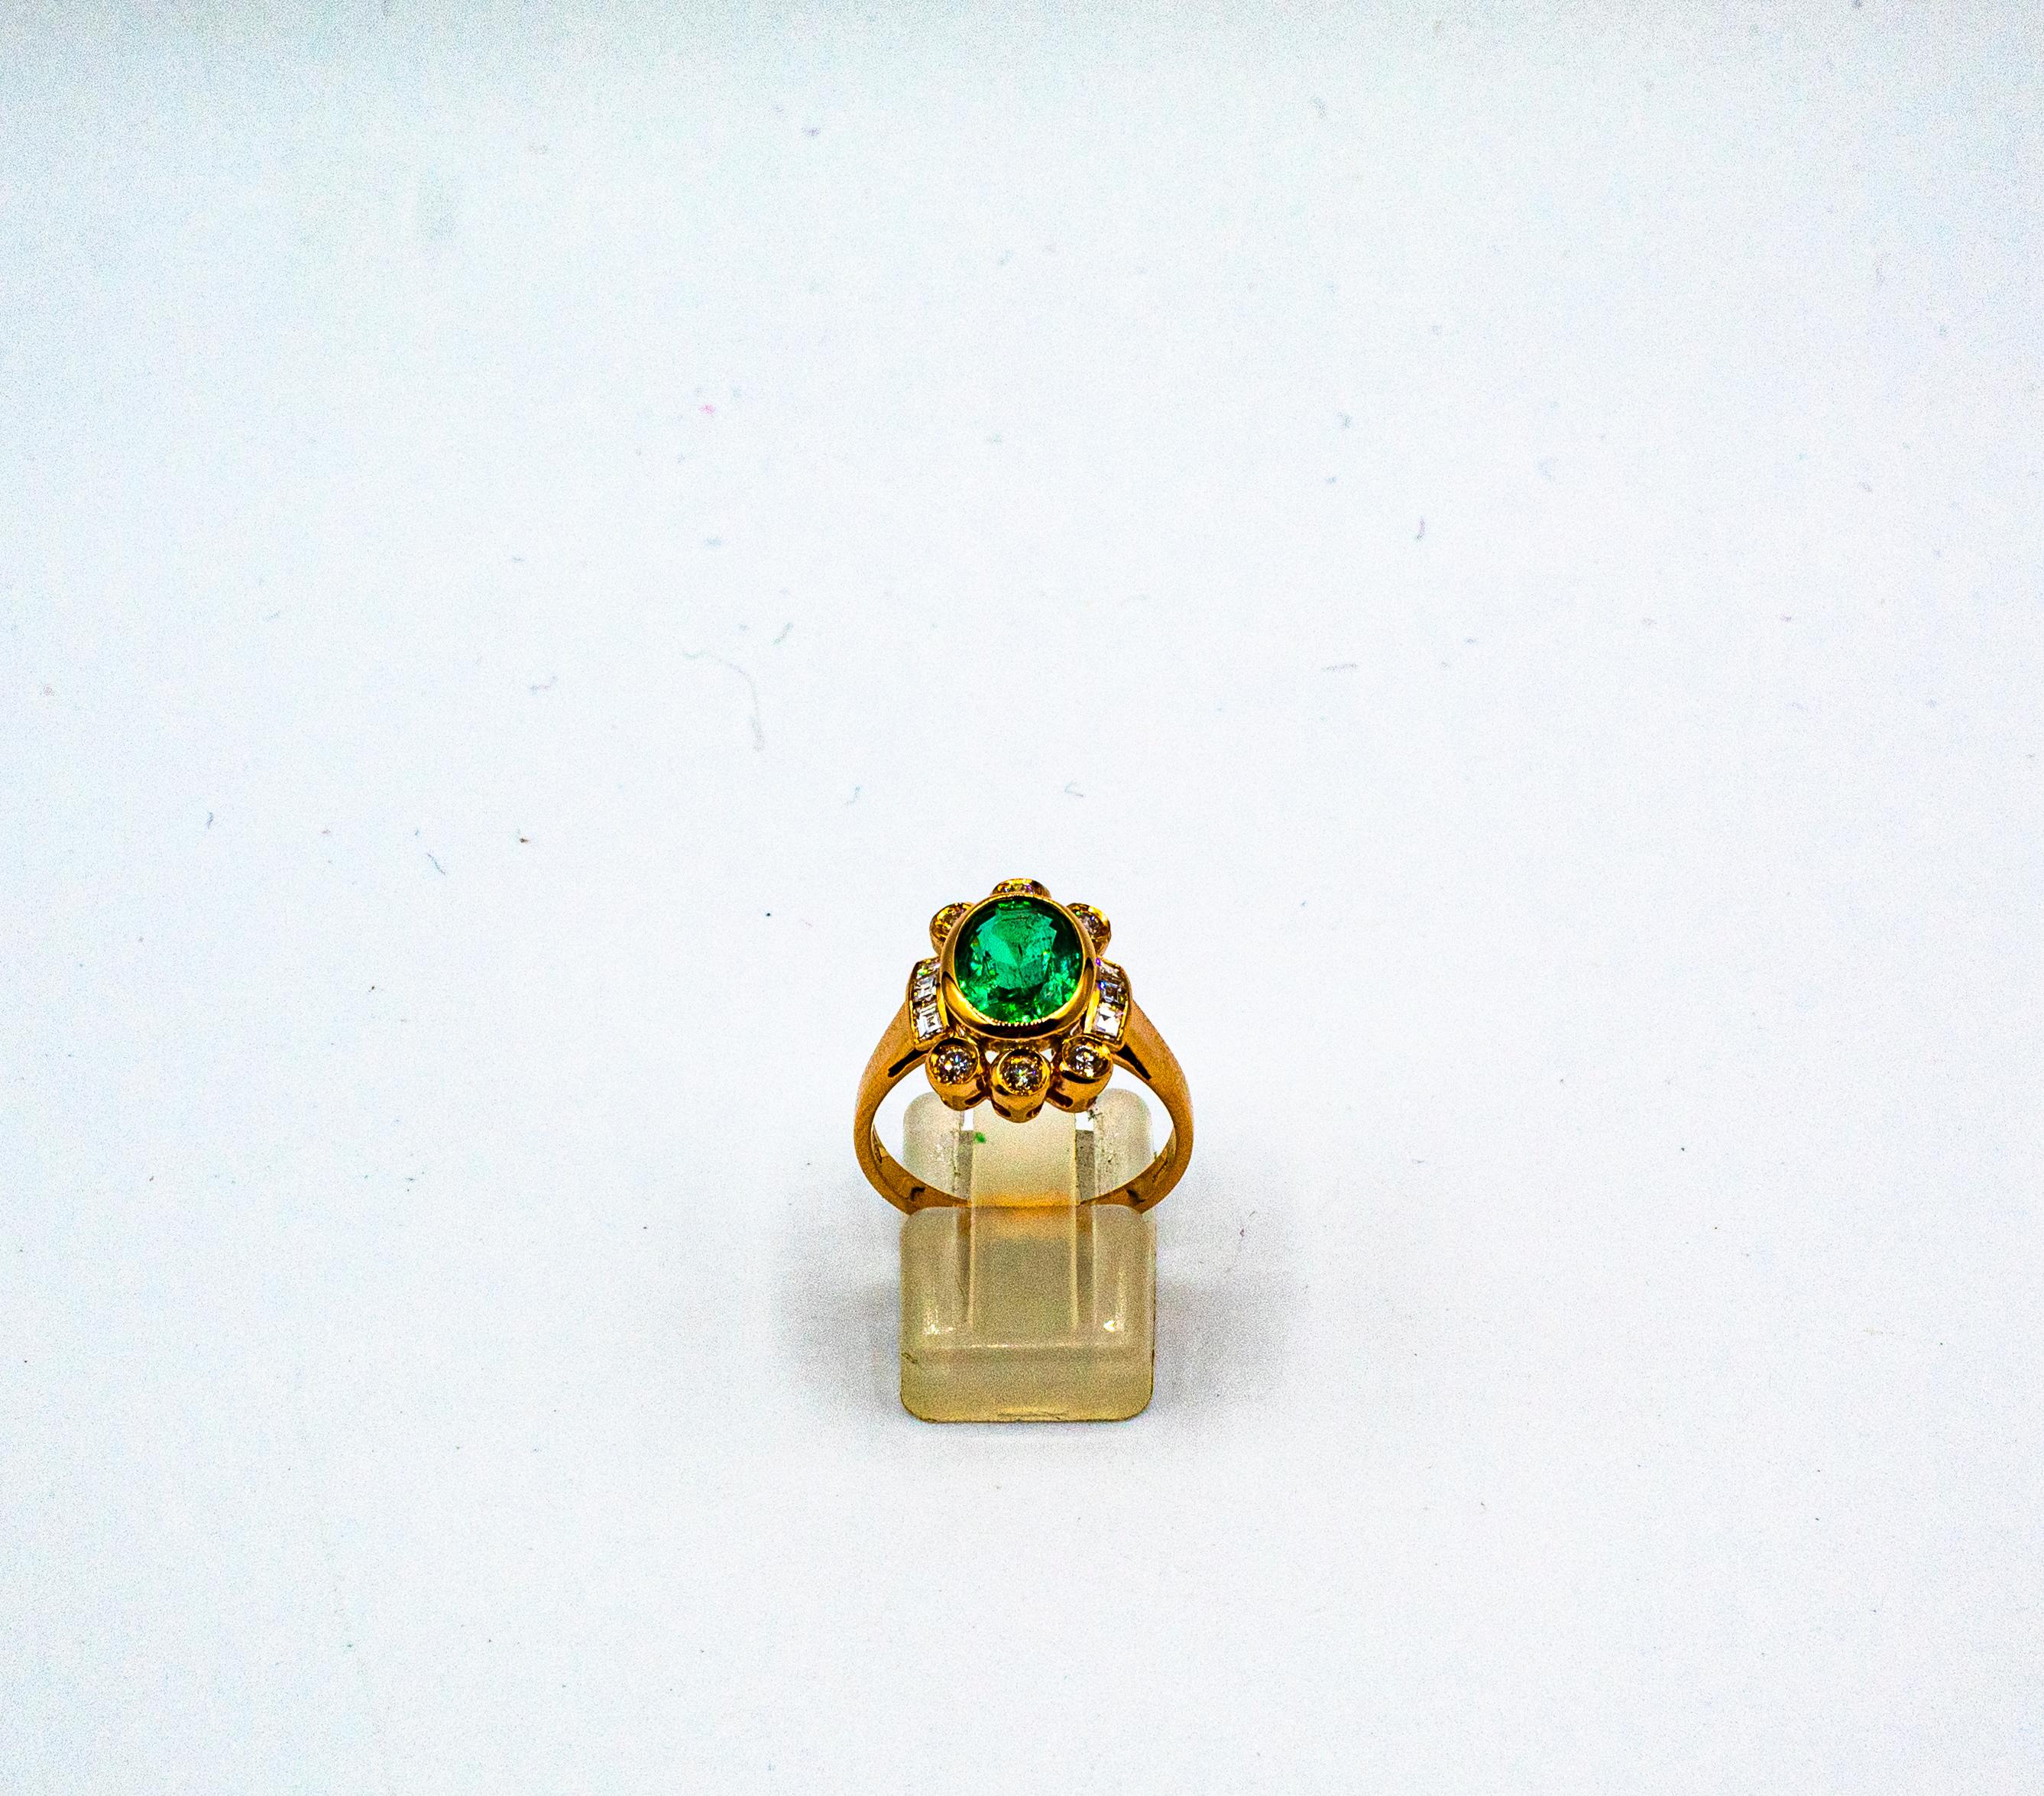 Brilliant Cut Art Deco Style Oval Cut Emerald White Diamond Yellow Gold Cocktail Ring